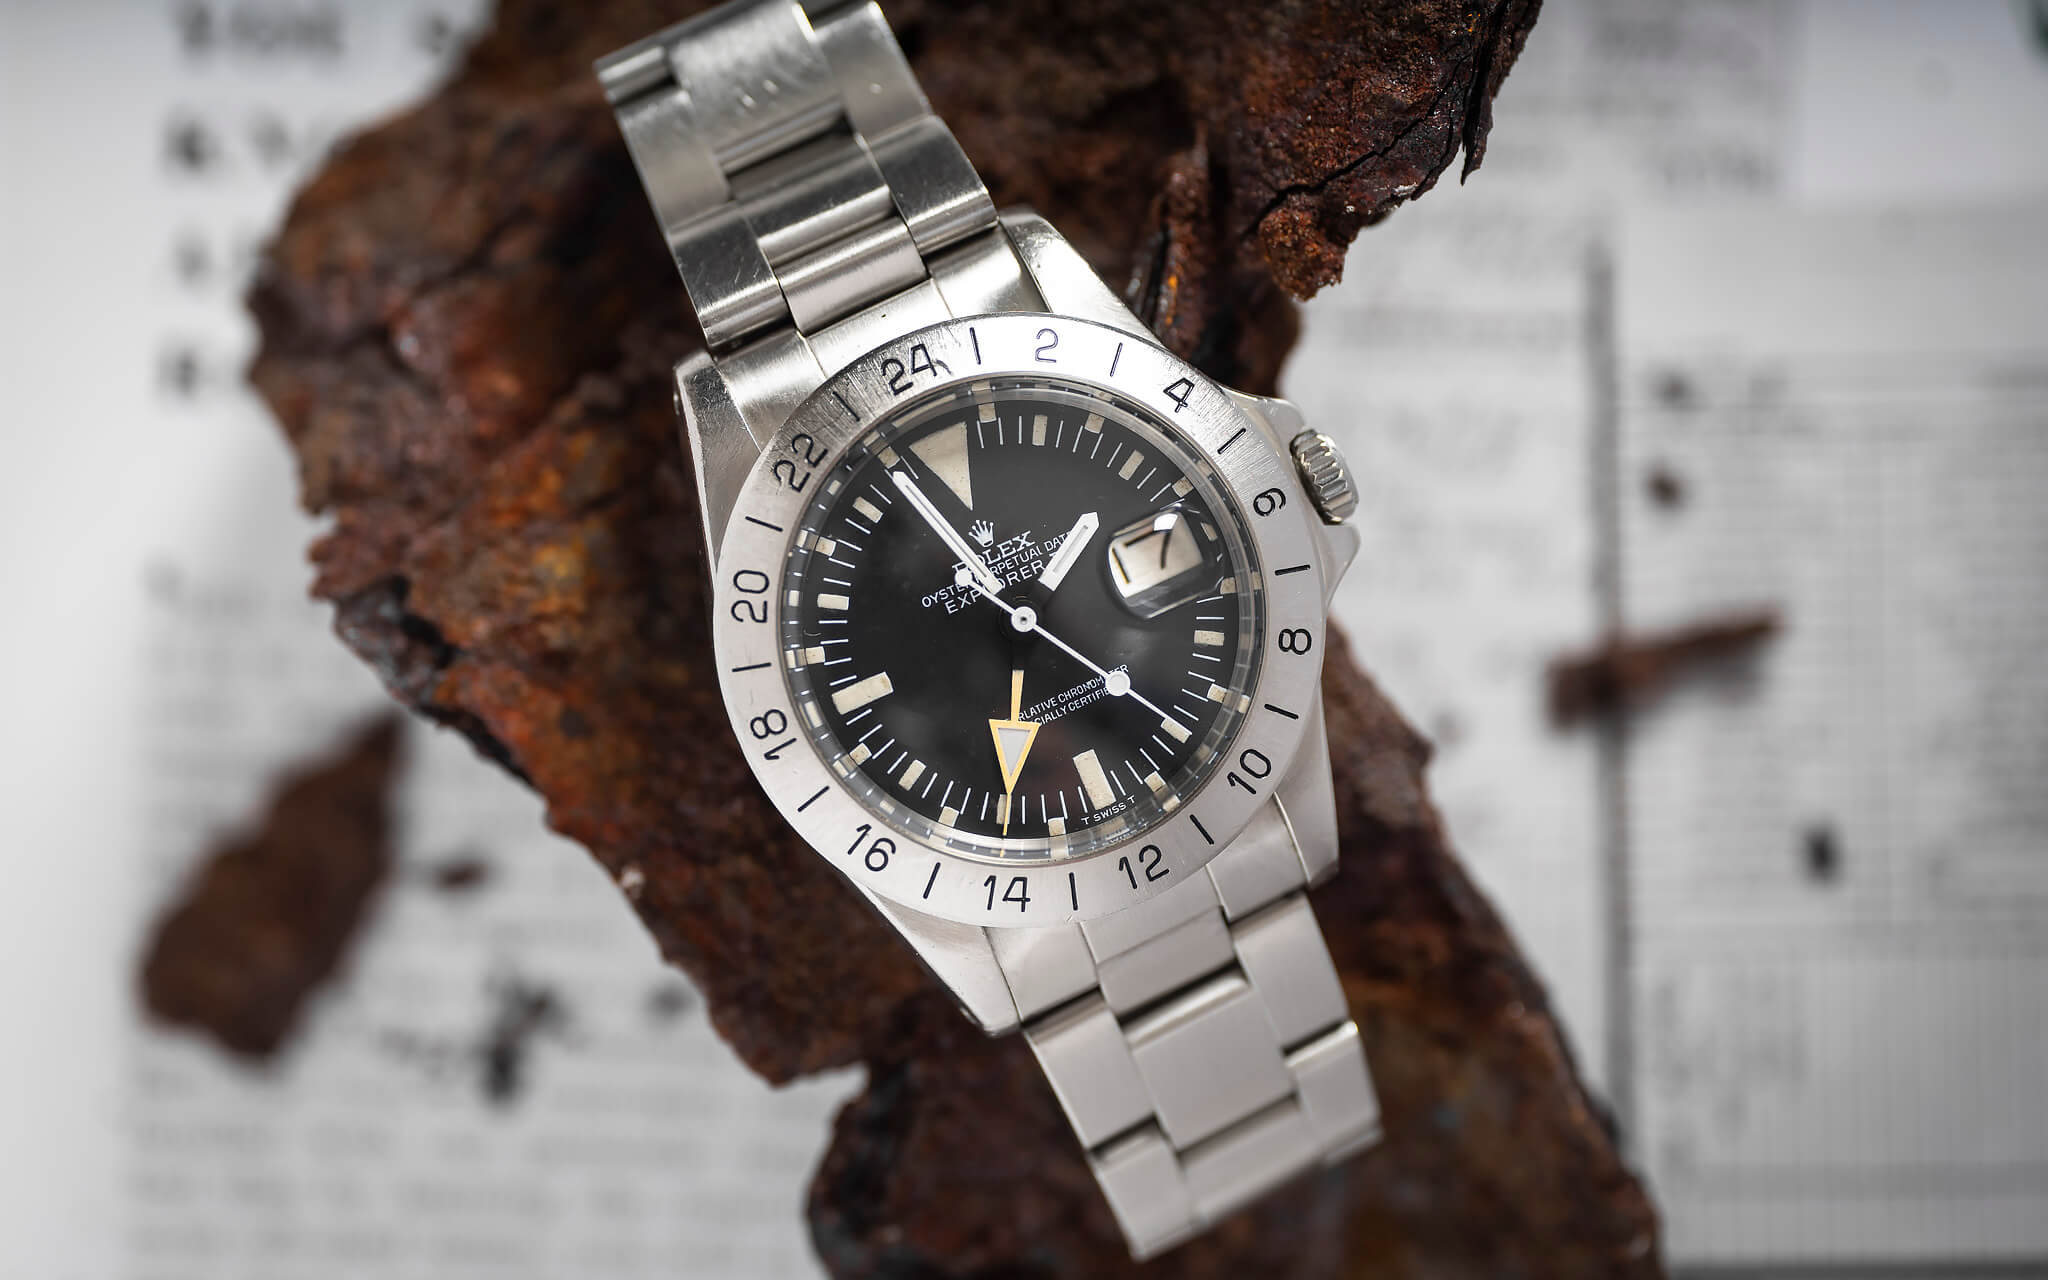 Exploring The Explorer II; The Watch Rolex Designed For Cave-Explorers